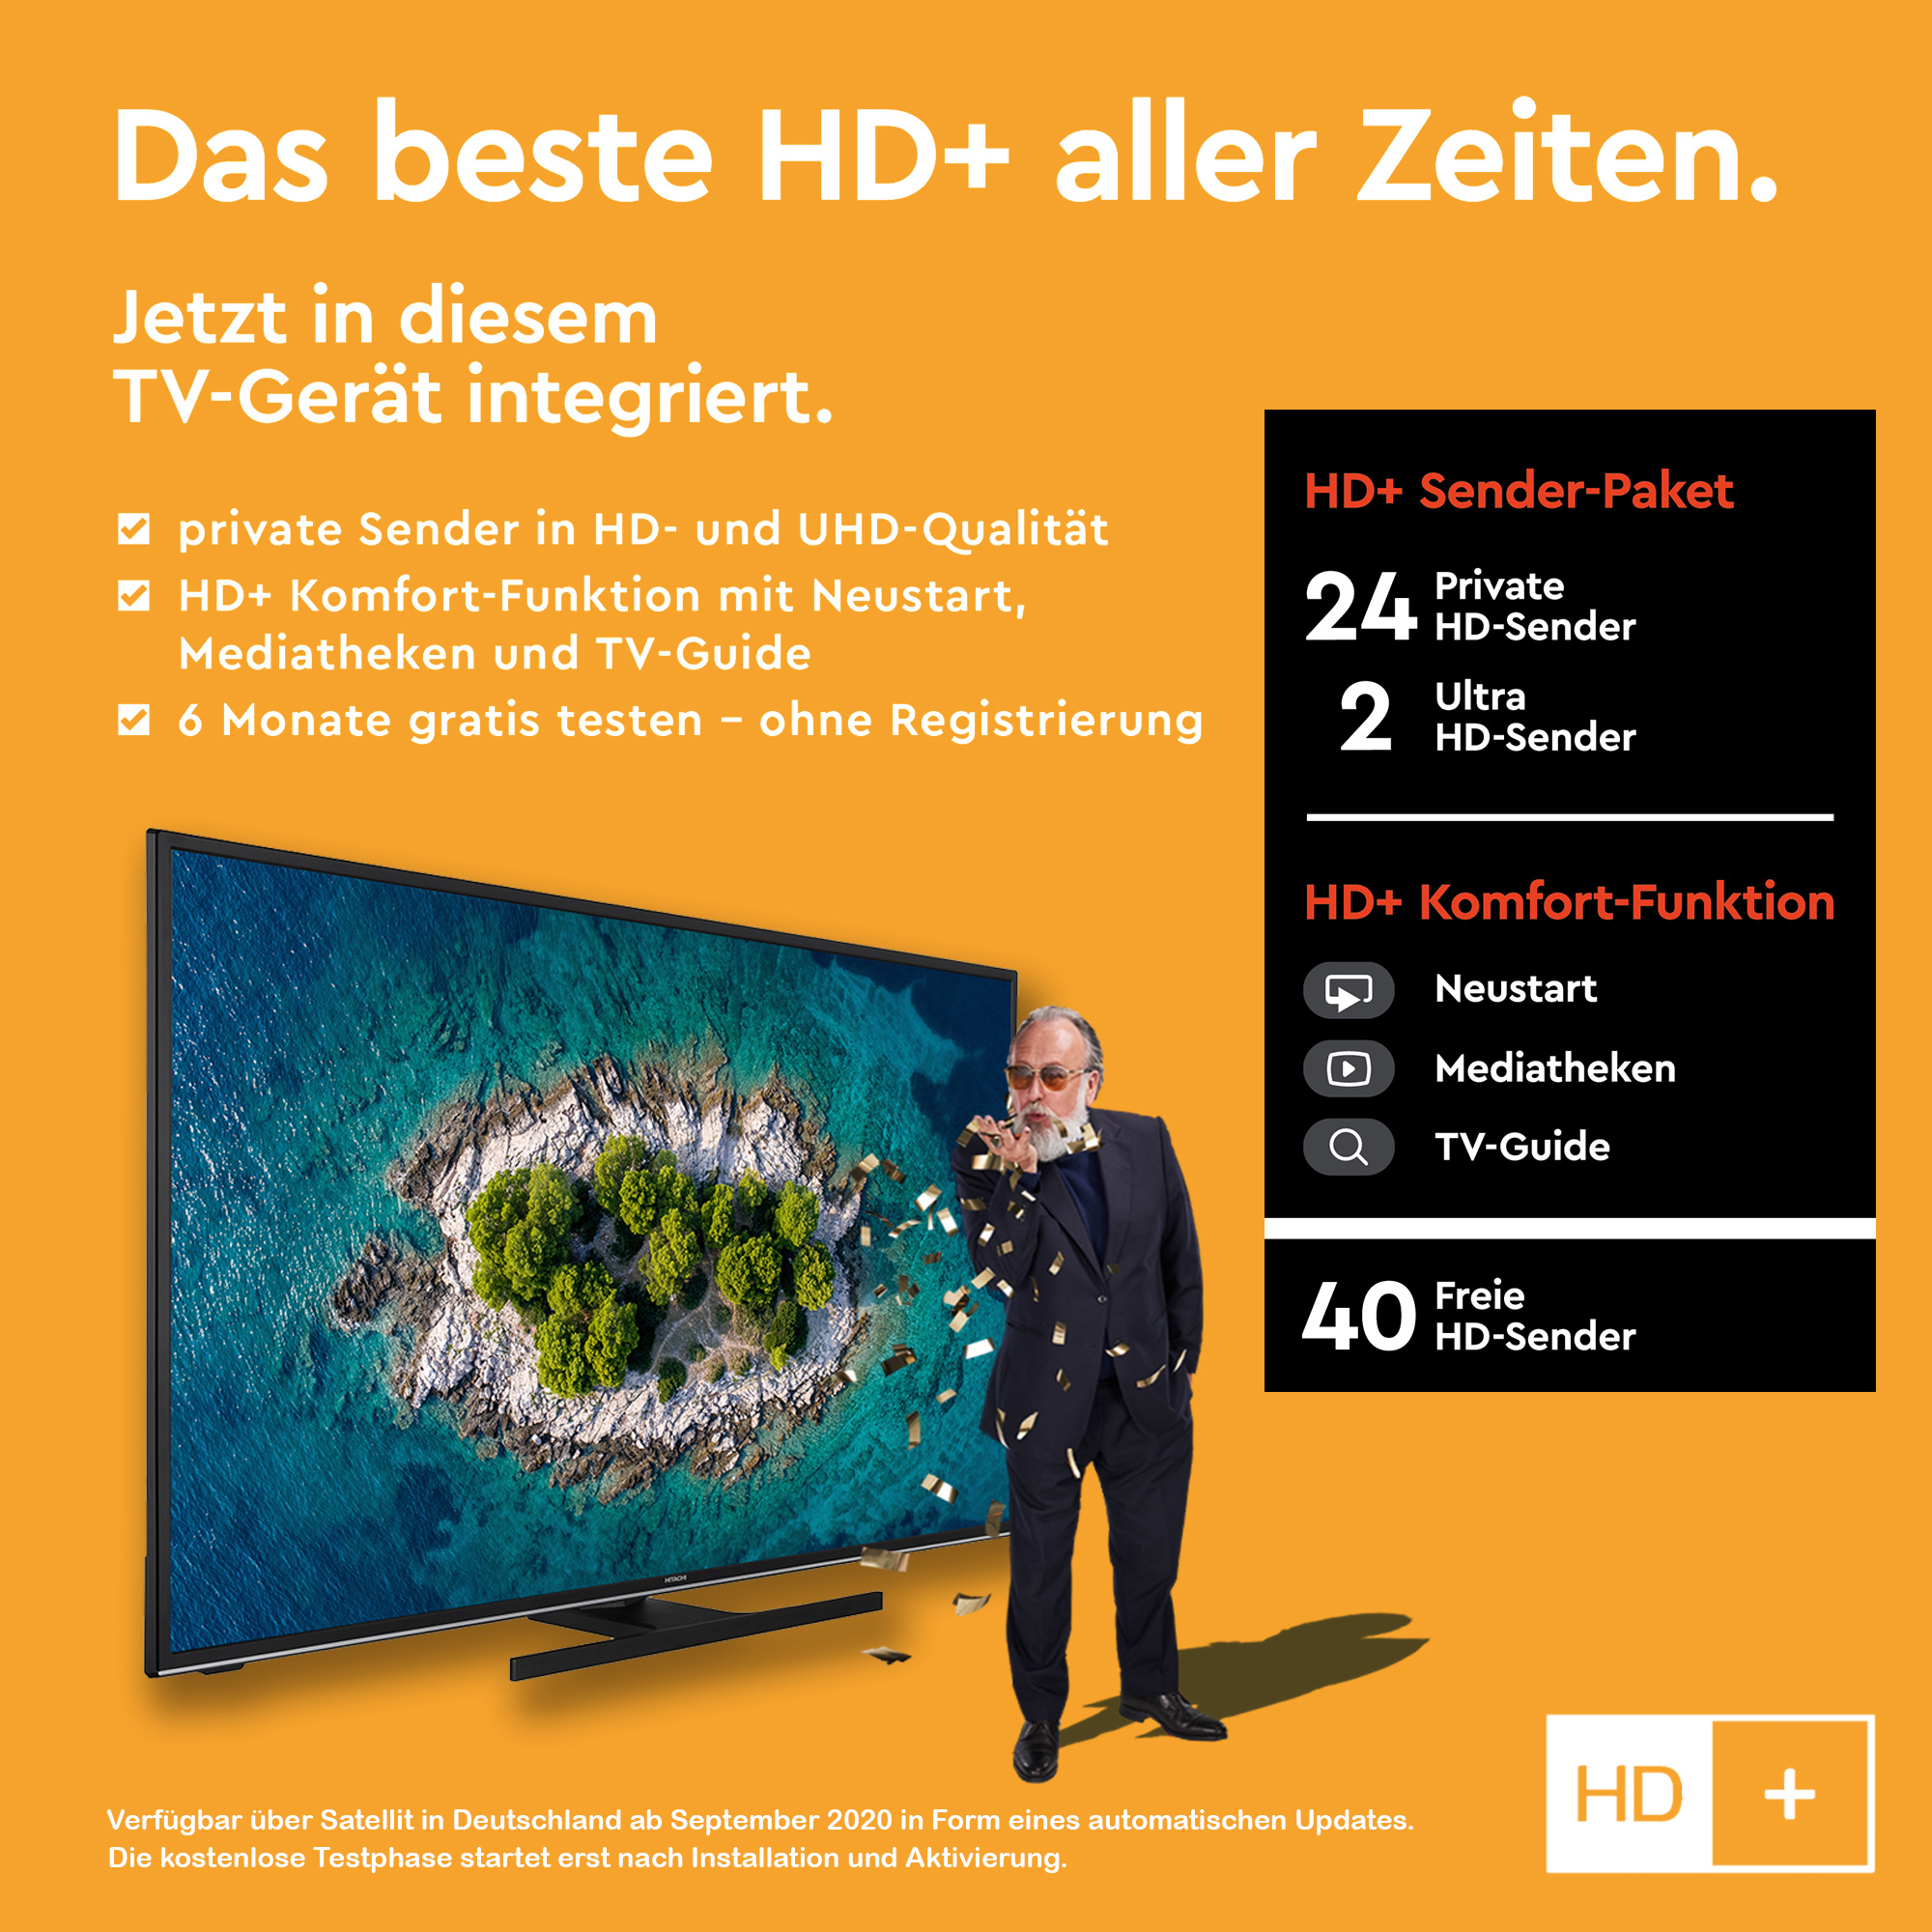 4K, LED TV SMART TV) UHD U50K6100A (Flat, HITACHI